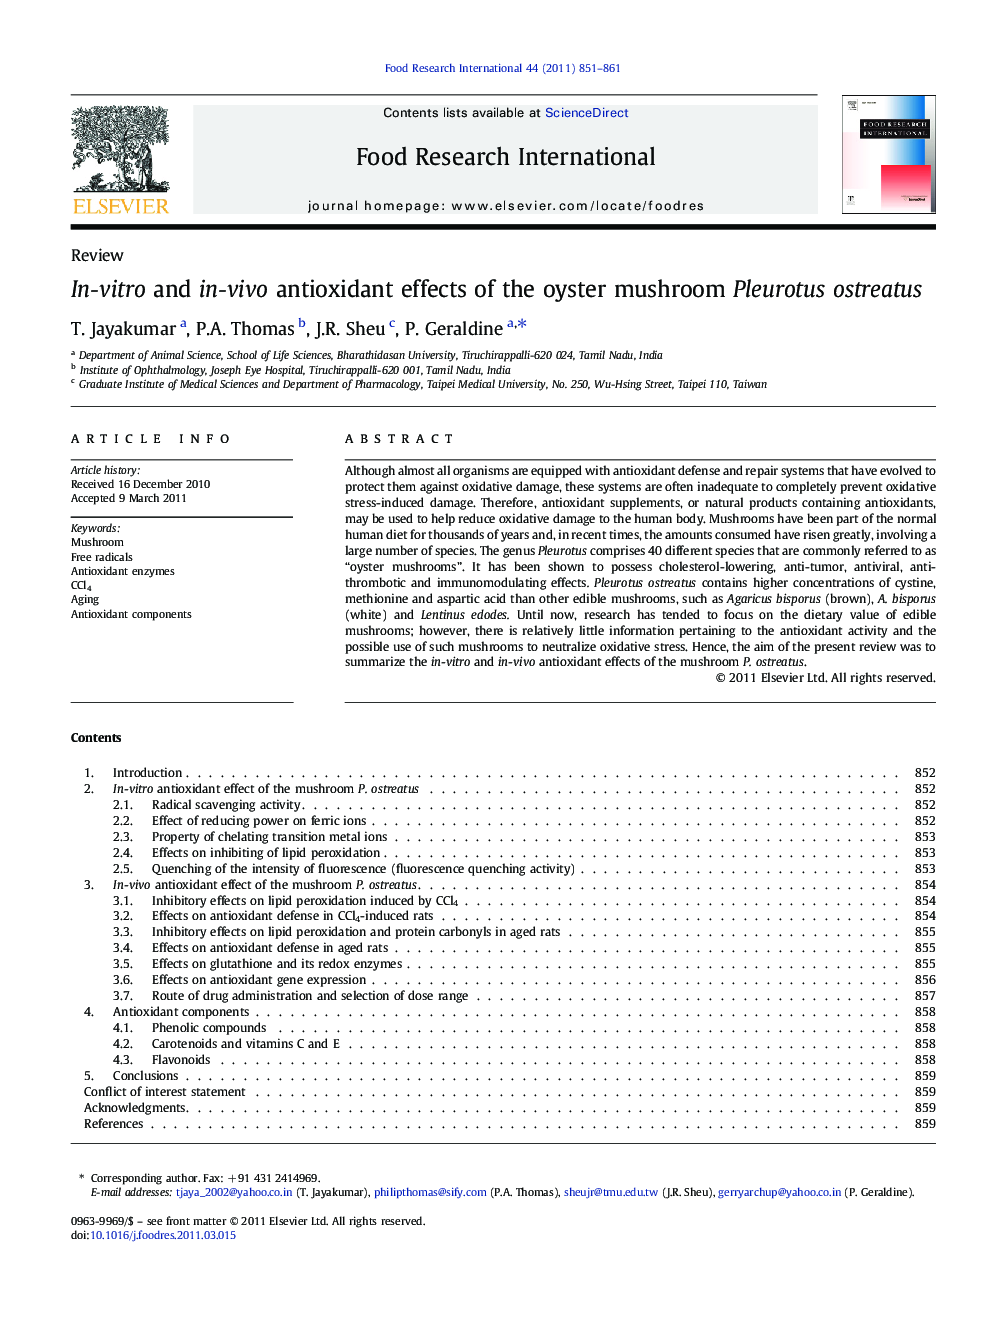 In-vitro and in-vivo antioxidant effects of the oyster mushroom Pleurotus ostreatus